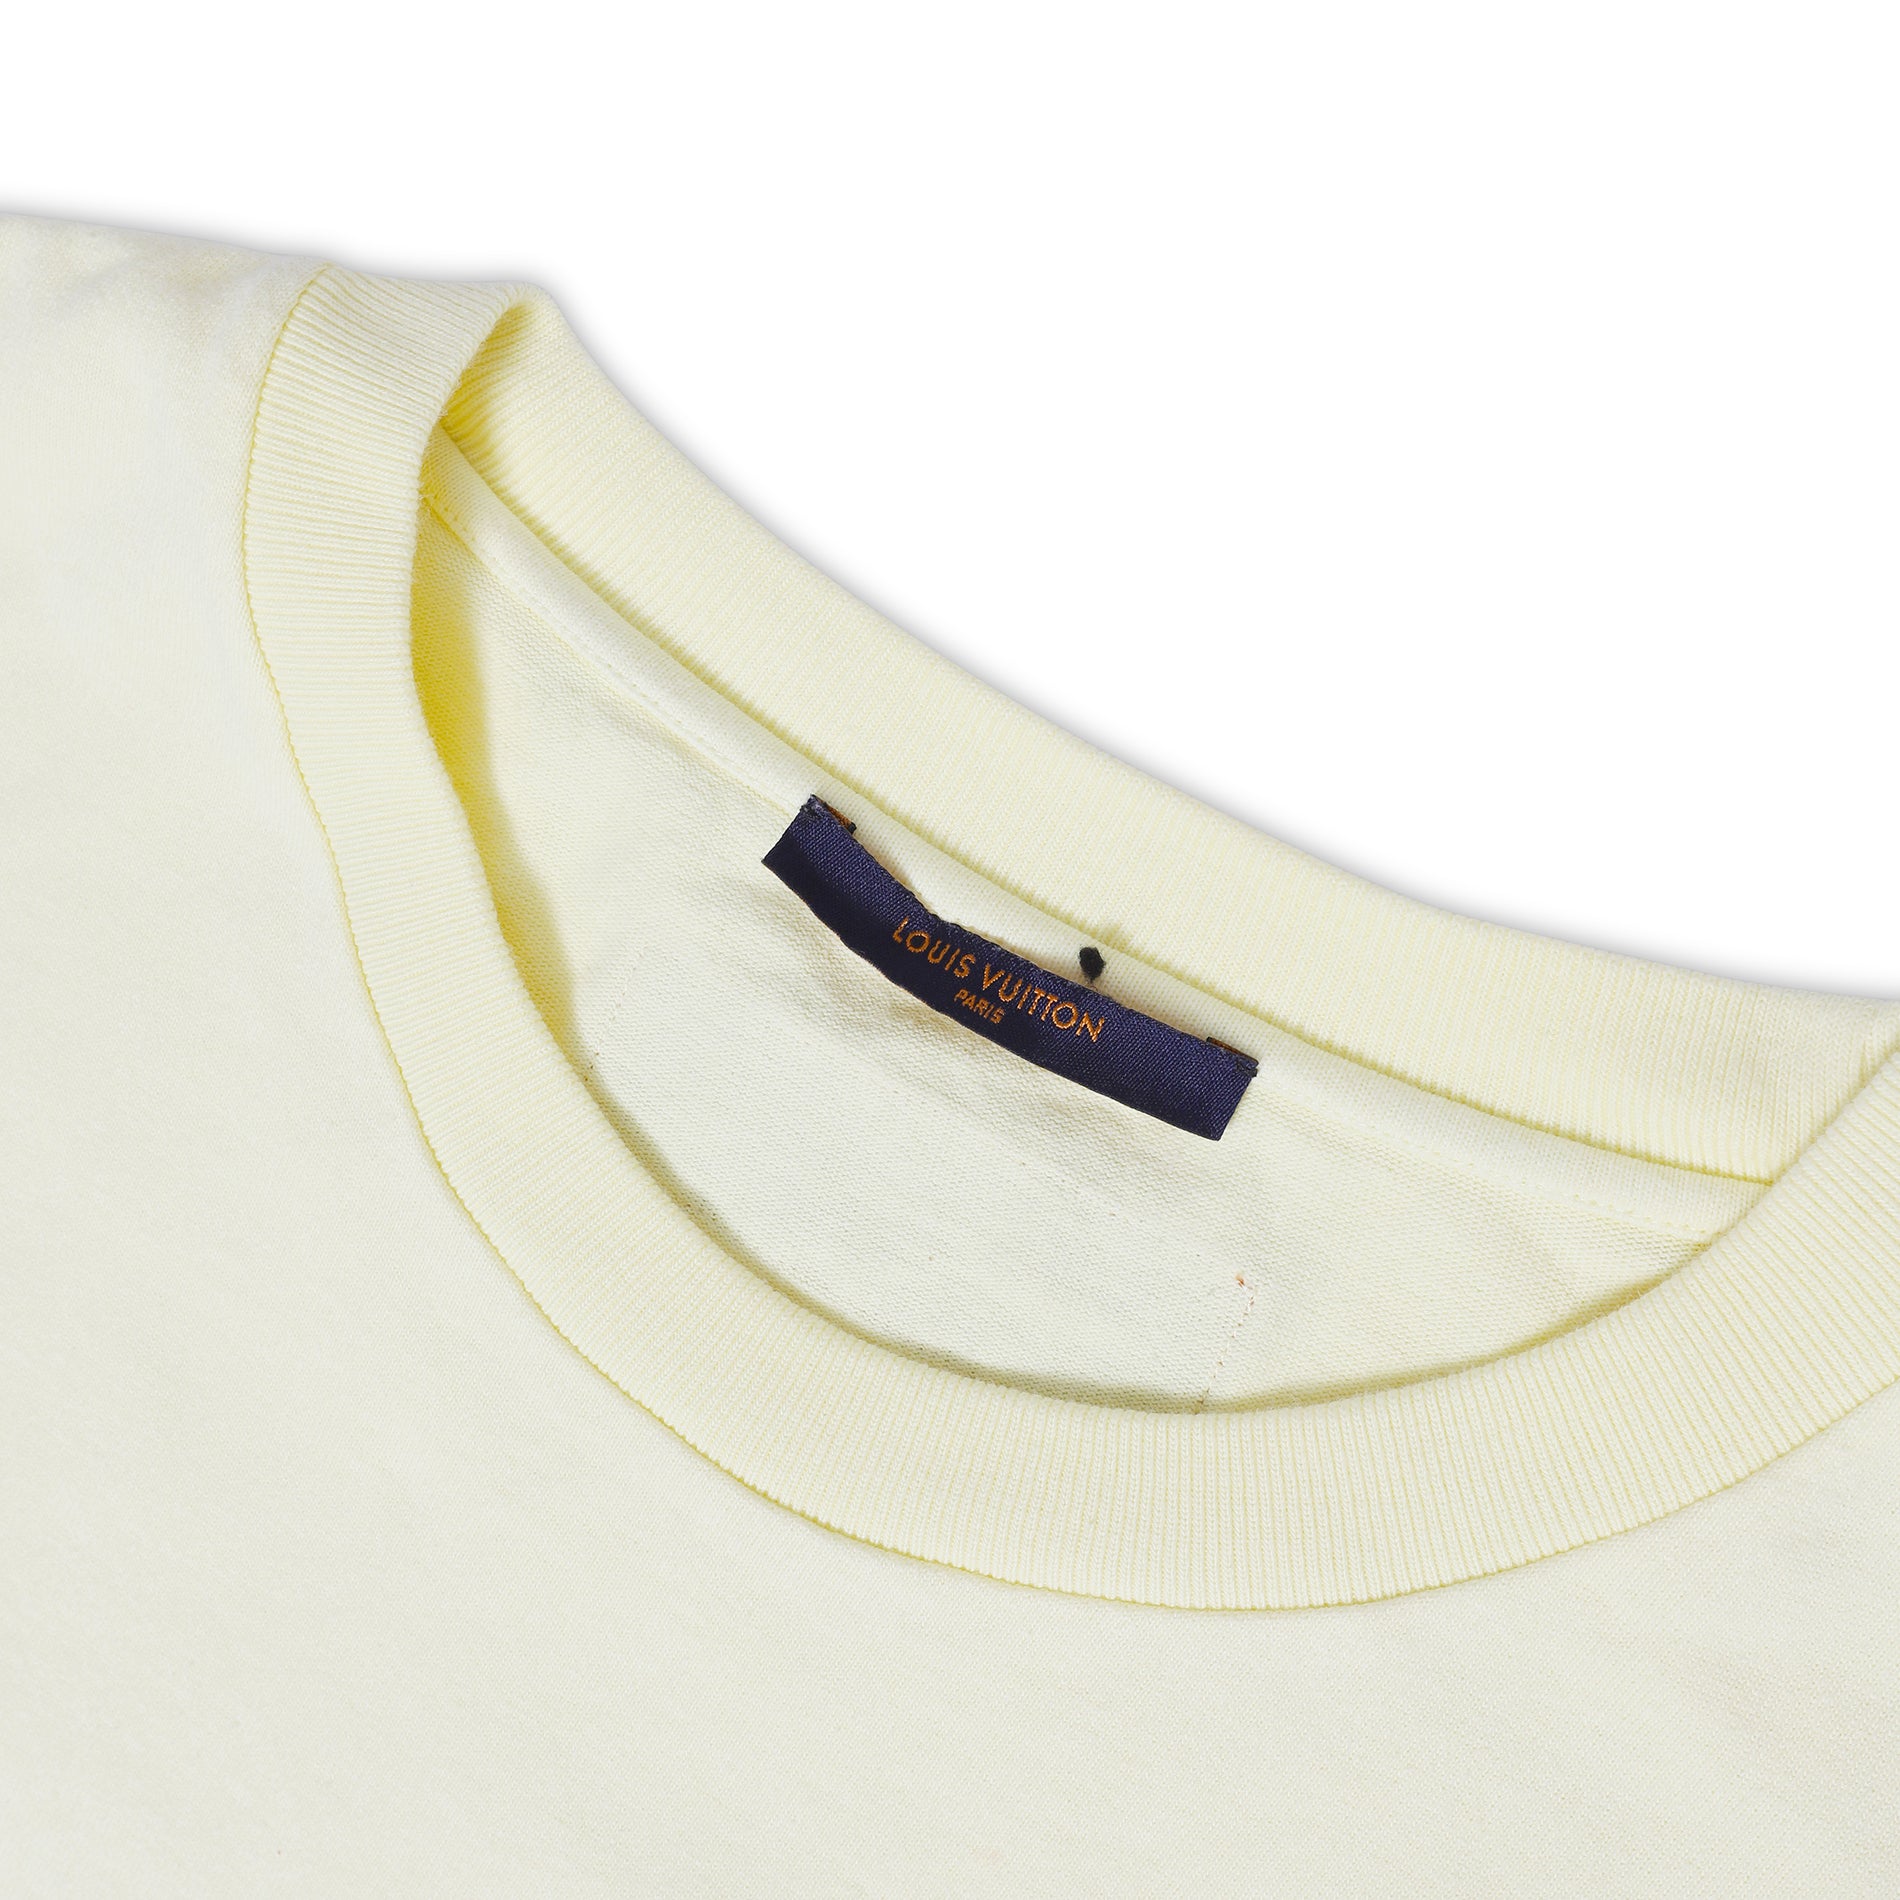 Louis Vuitton Inside Out T-Shirt